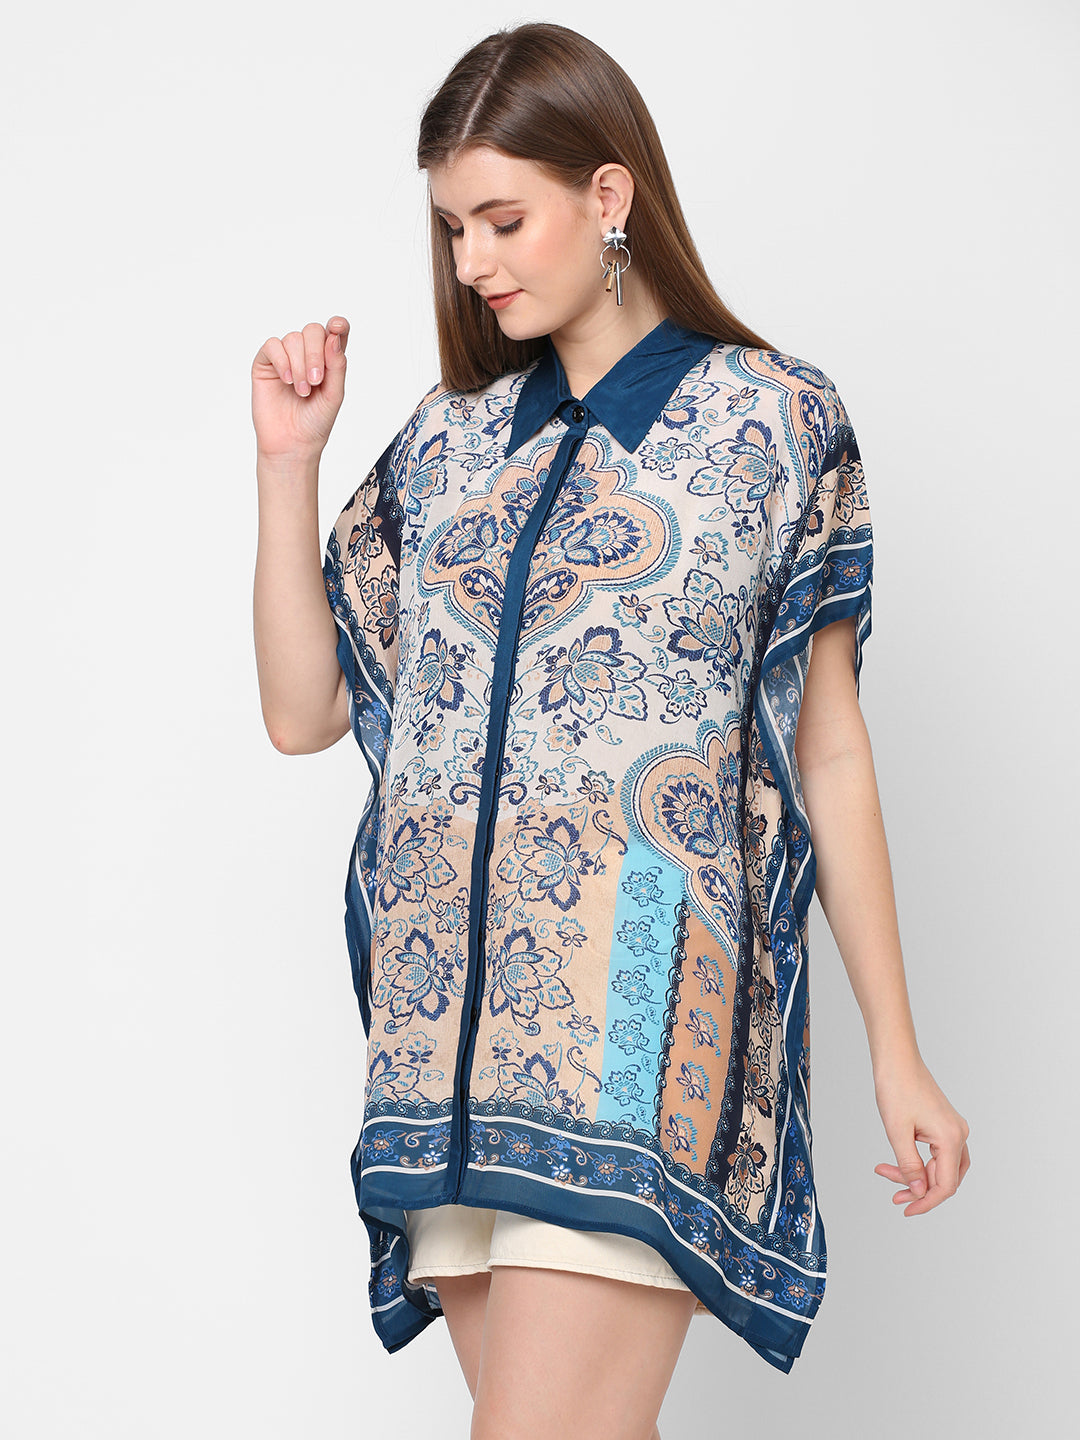 Blue Floral Printed Shirt Style Kaftan Tunic